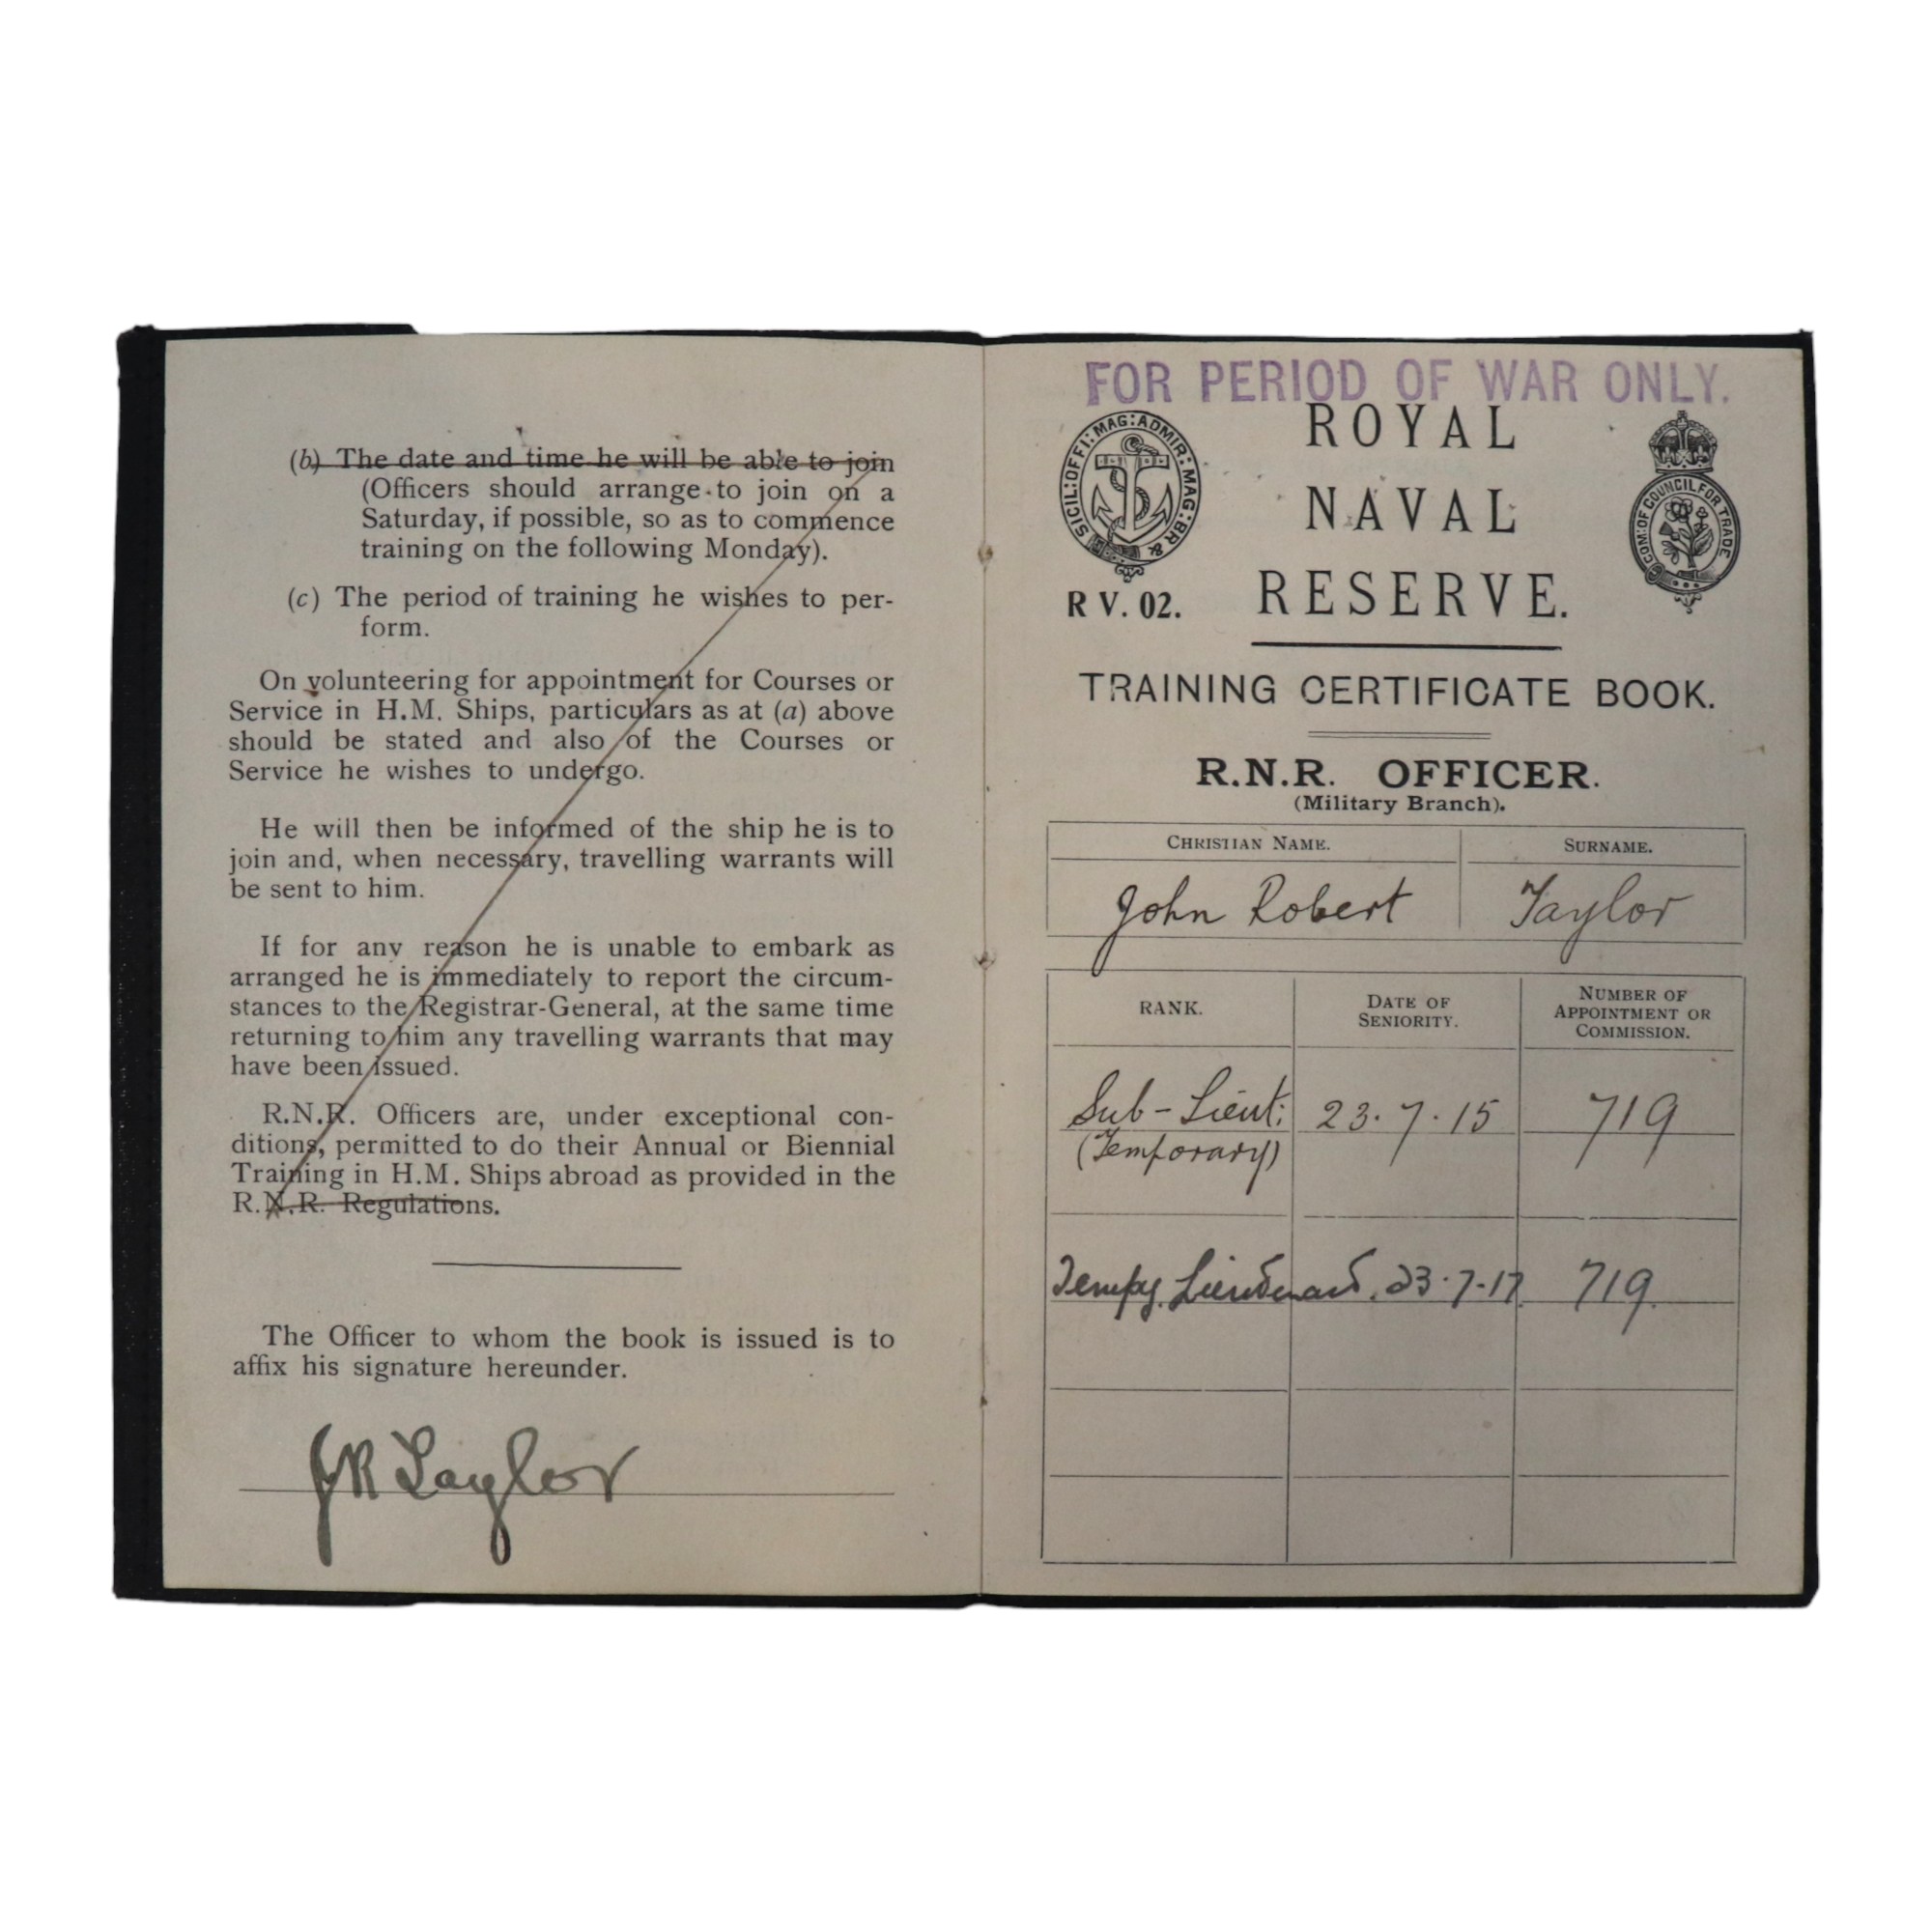 An extensive Great War Royal Navy Reserve document group, pertaining to Captain John Robert - Image 8 of 10